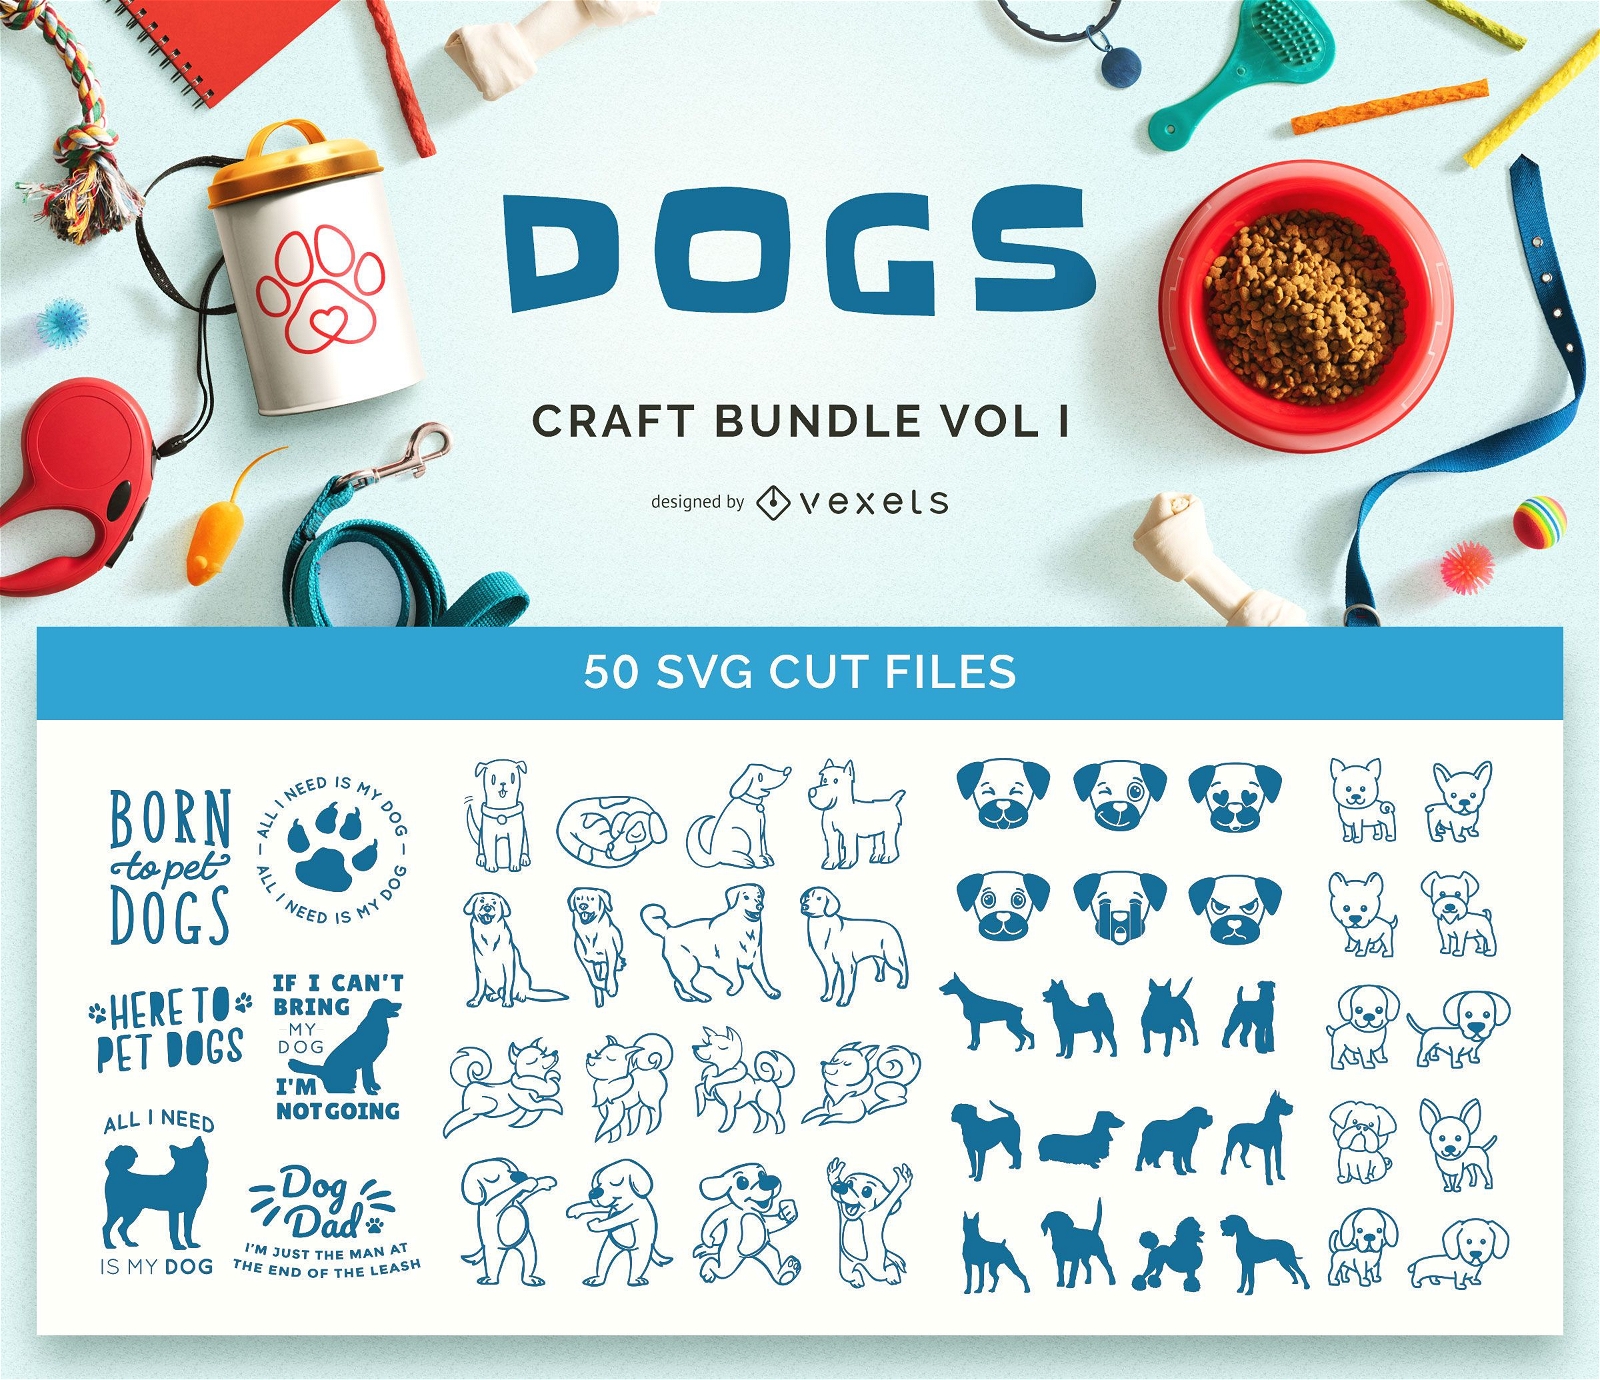 Dogs Craft Bundle Vol I.